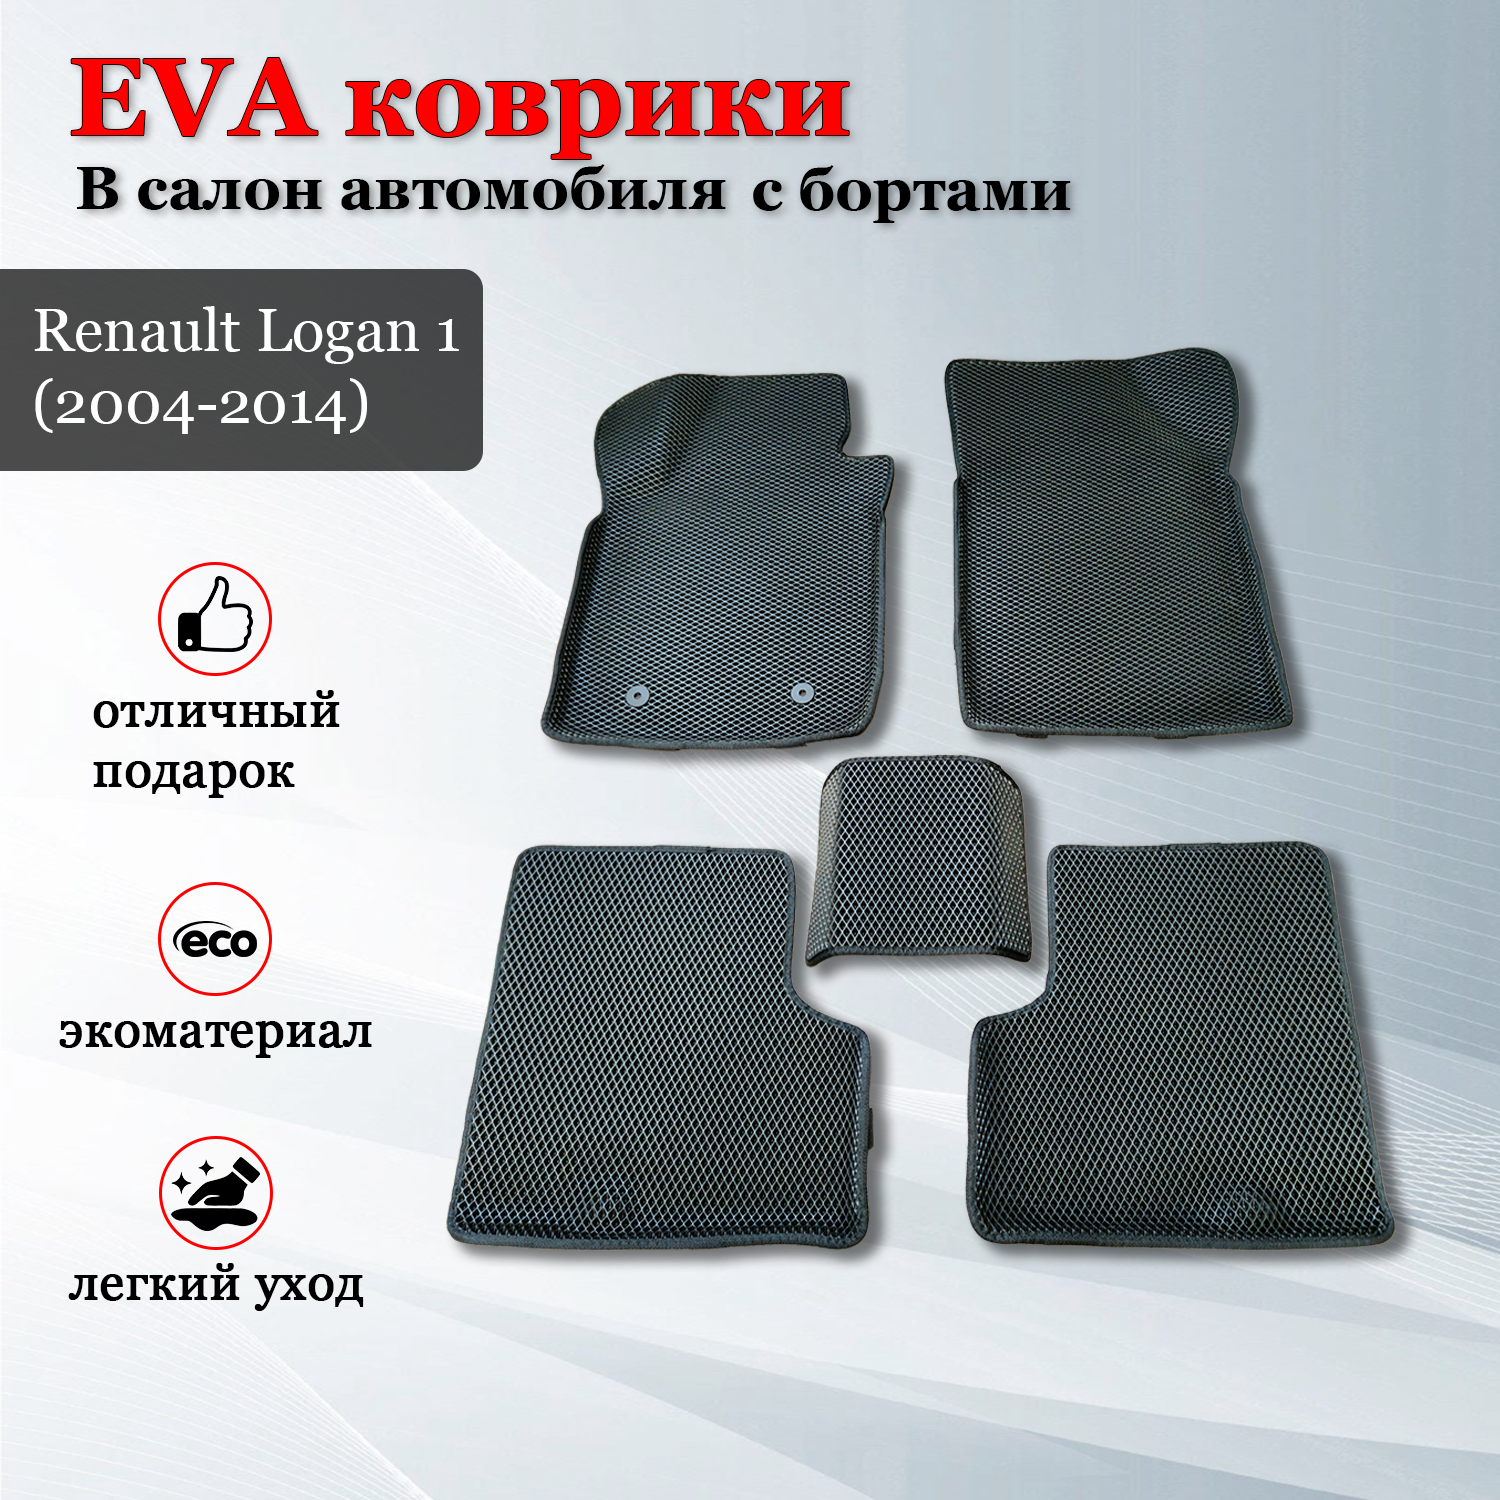 EVA (EВА, ЭВА) коврики с бортами в салон автомобиля Рено Логан 1 / Renault Logan 1 (2004-2015)